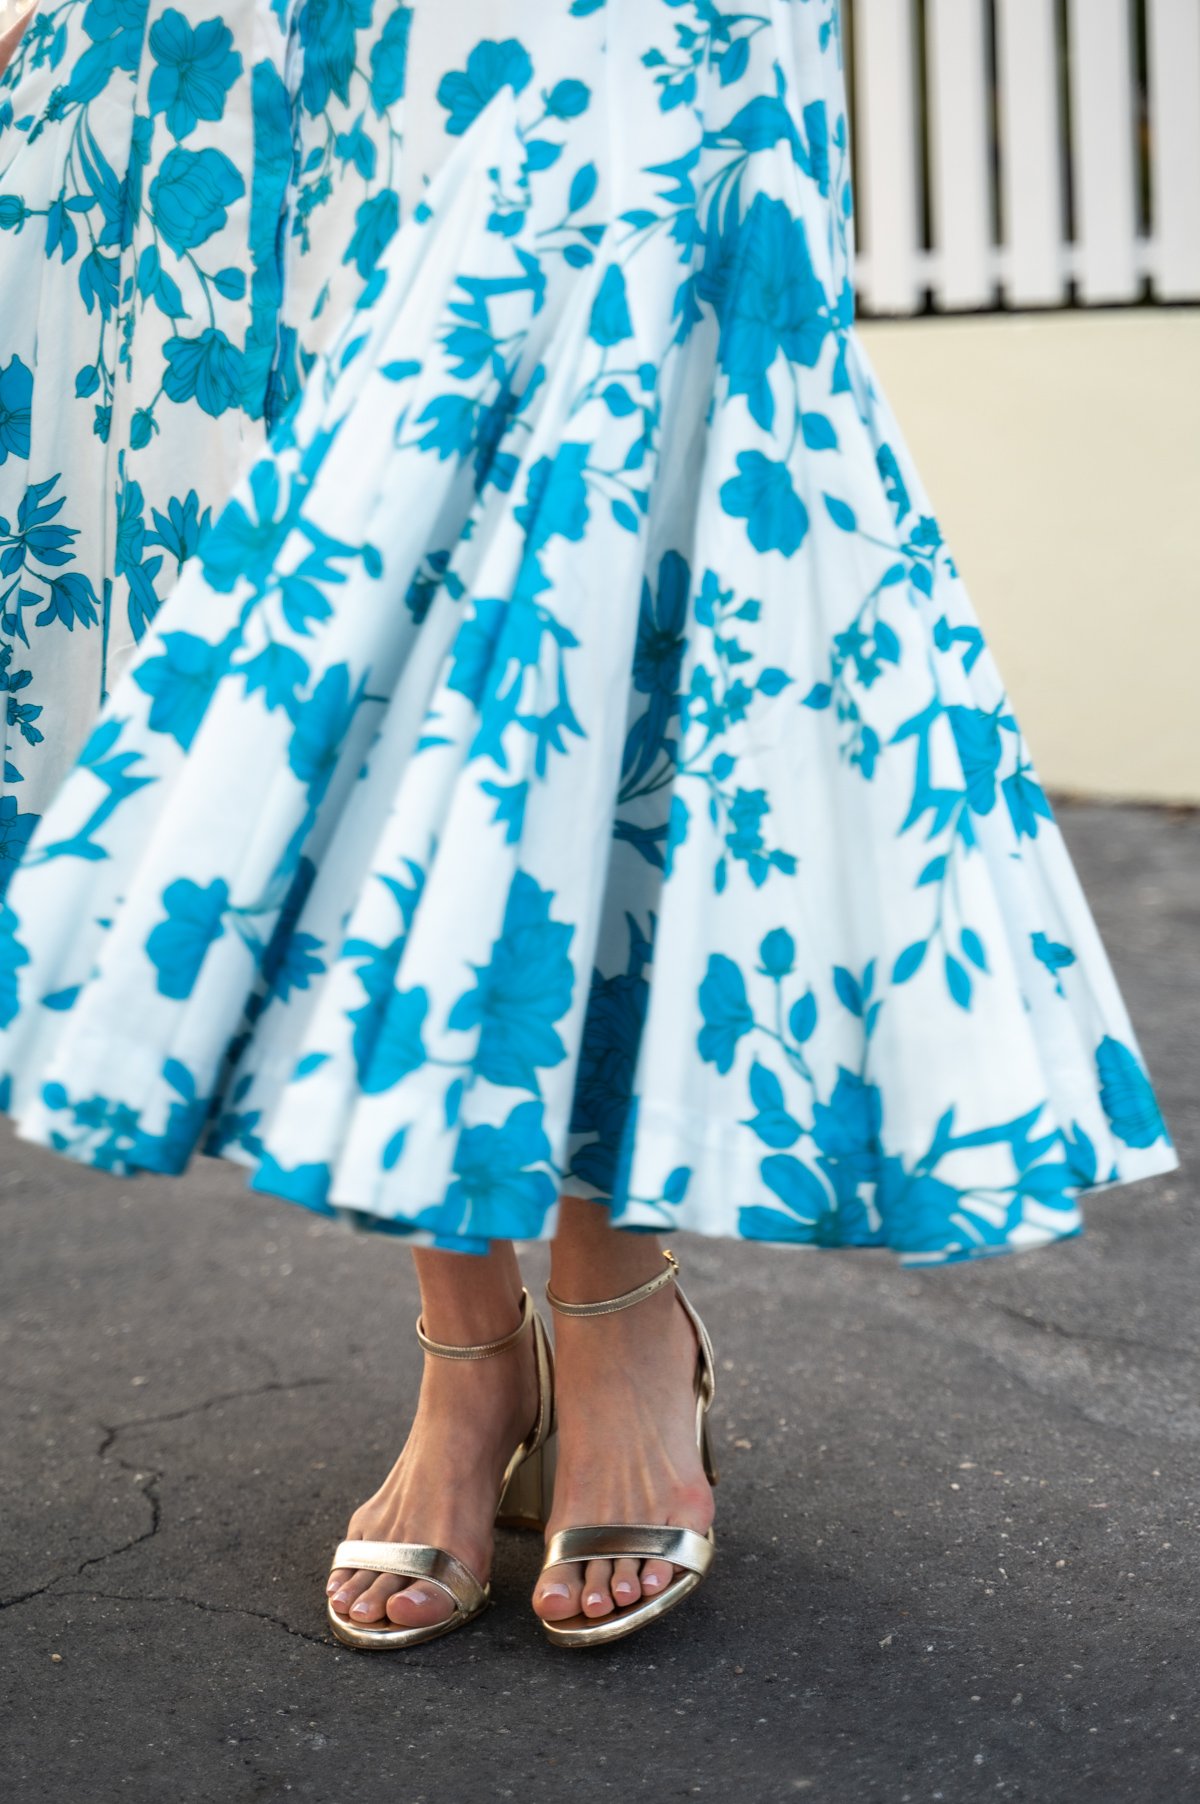 Stacie Flinner MISA blue floral dress Bahamas-6.jpg